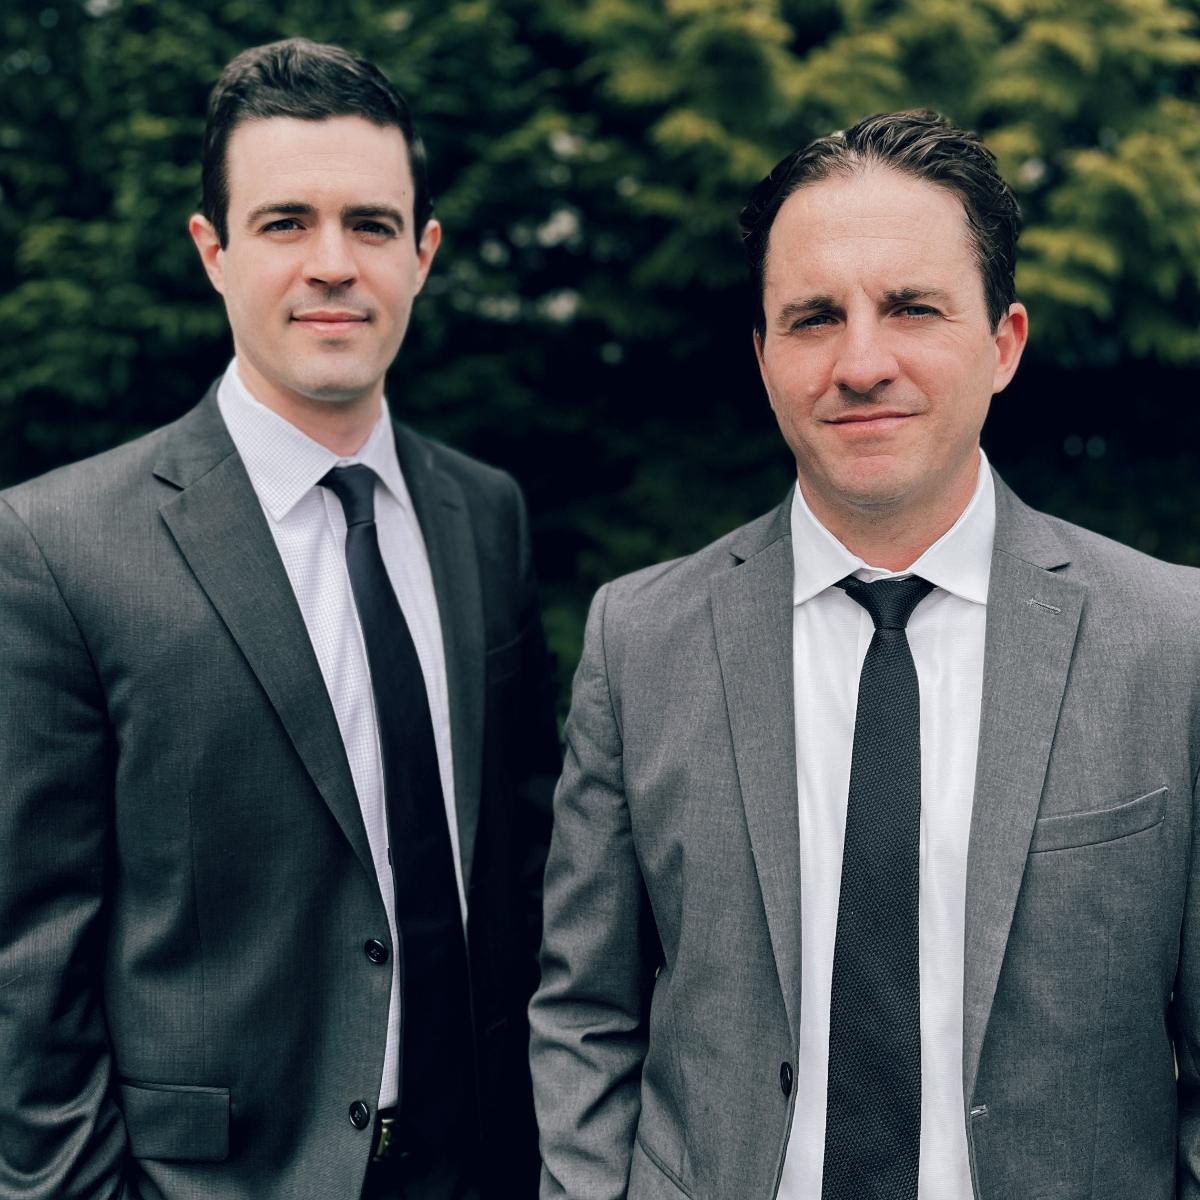 Attorneys Dan McLafferty & Jesse Froehling standing side-by-side